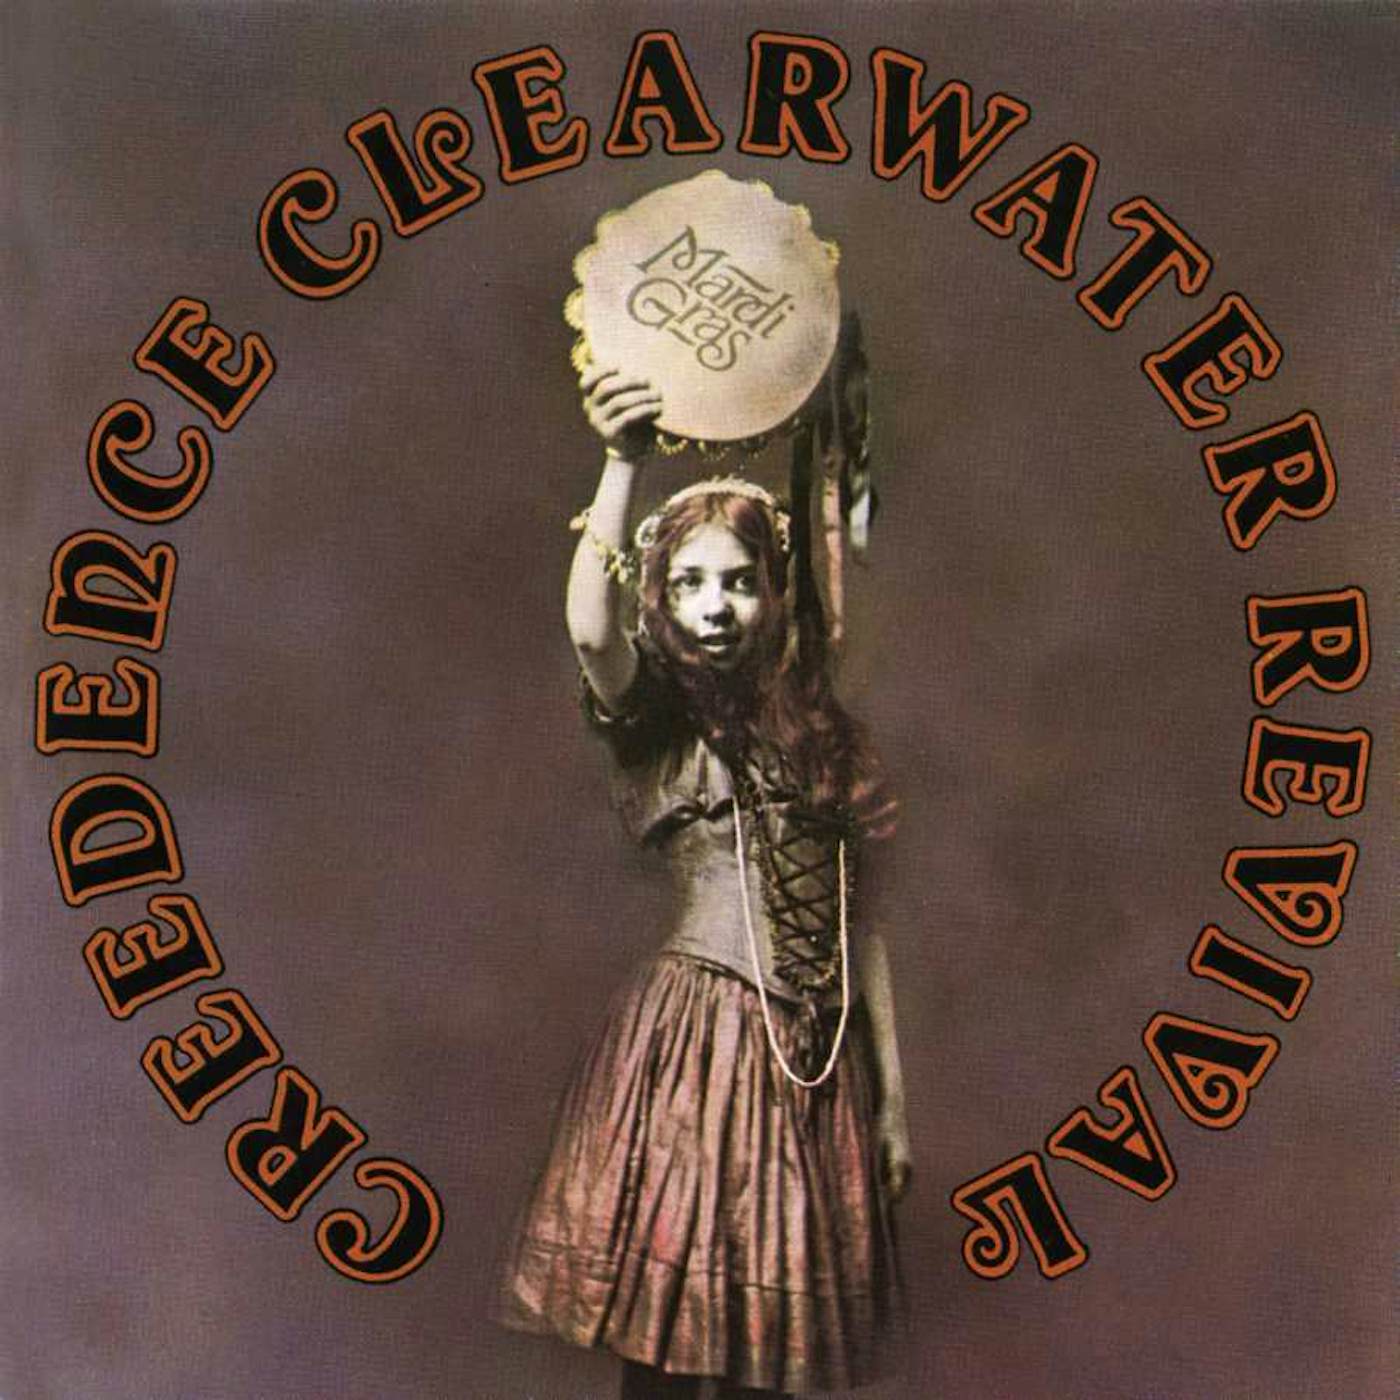 Creedence Clearwater Revival MARDI GRAS (HALF-SPEED MASTER) Vinyl Record